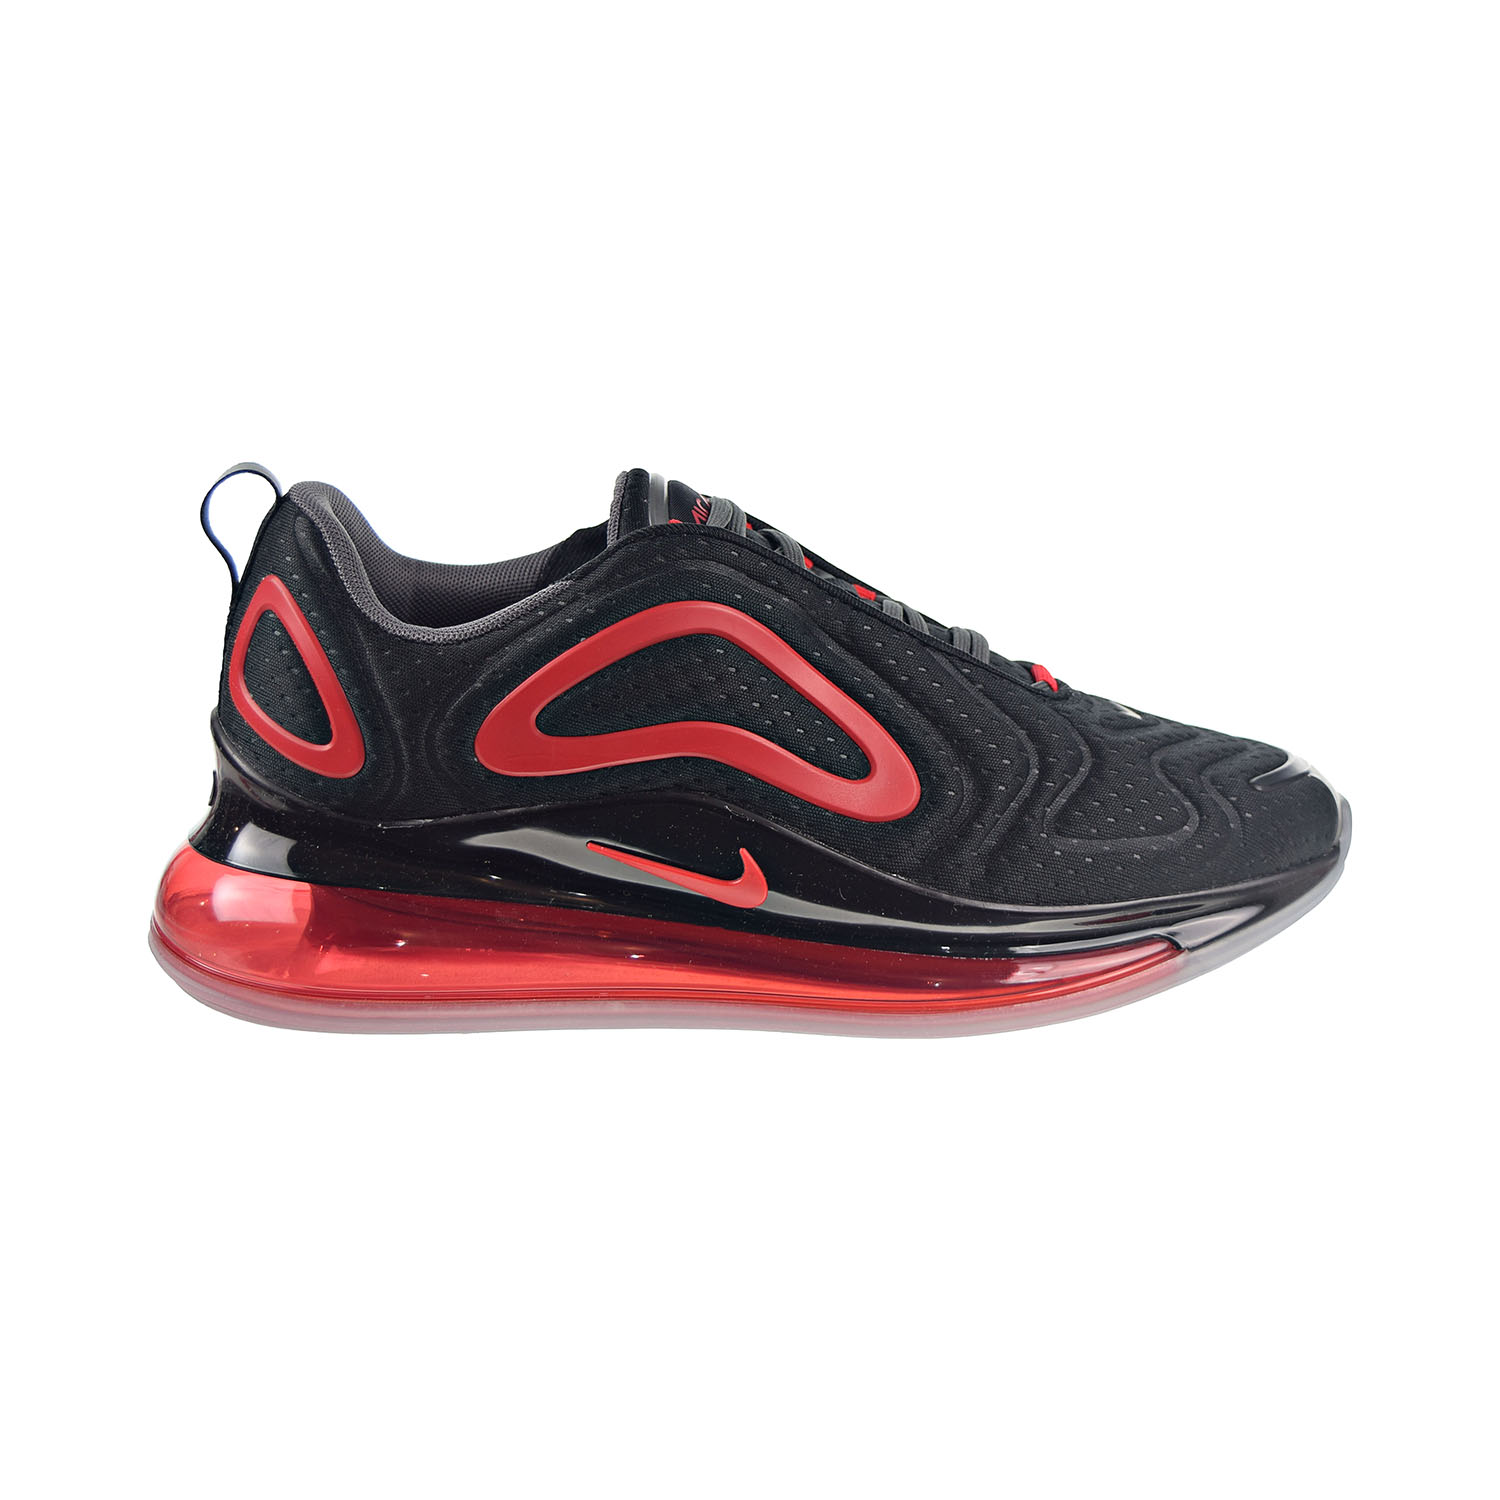 Nike Air Max 720-Mesh Men's Shoes Black-University Red cn9833-001 - image 1 of 6